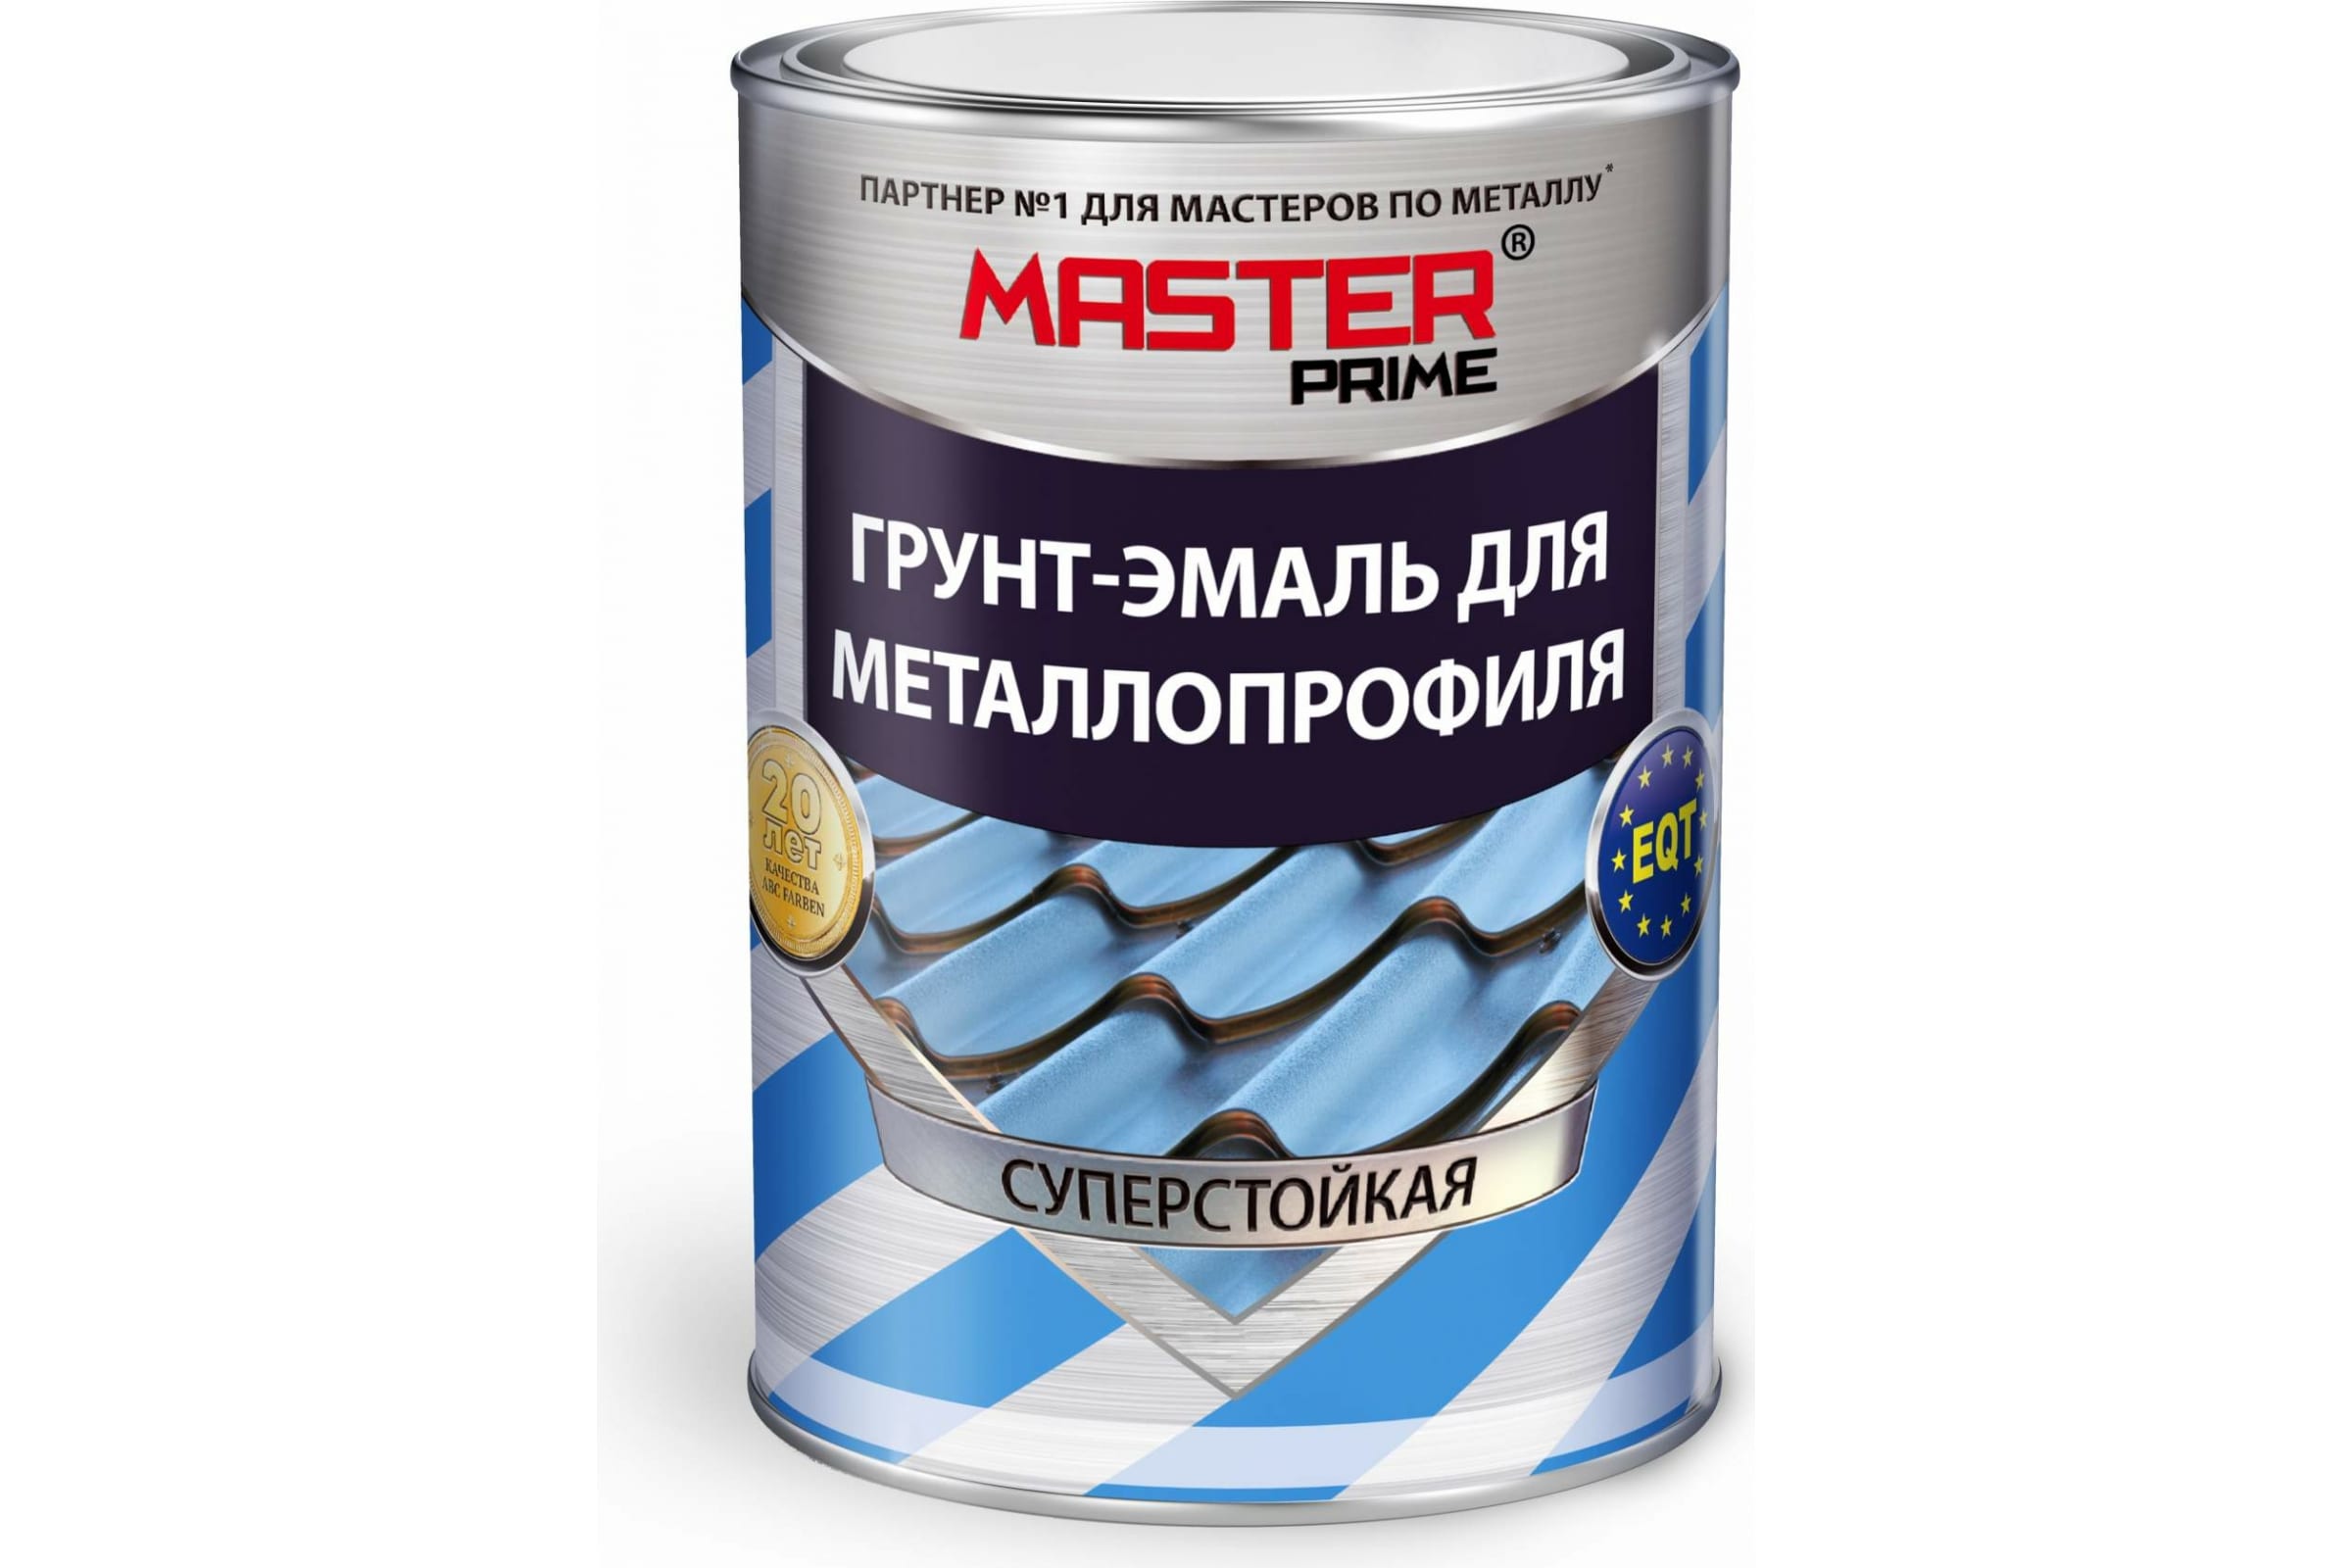 MASTER PRIME Грунт-эмаль для металлопрофиля RAL 7024 графитовый серый, 4 кг 4300008851